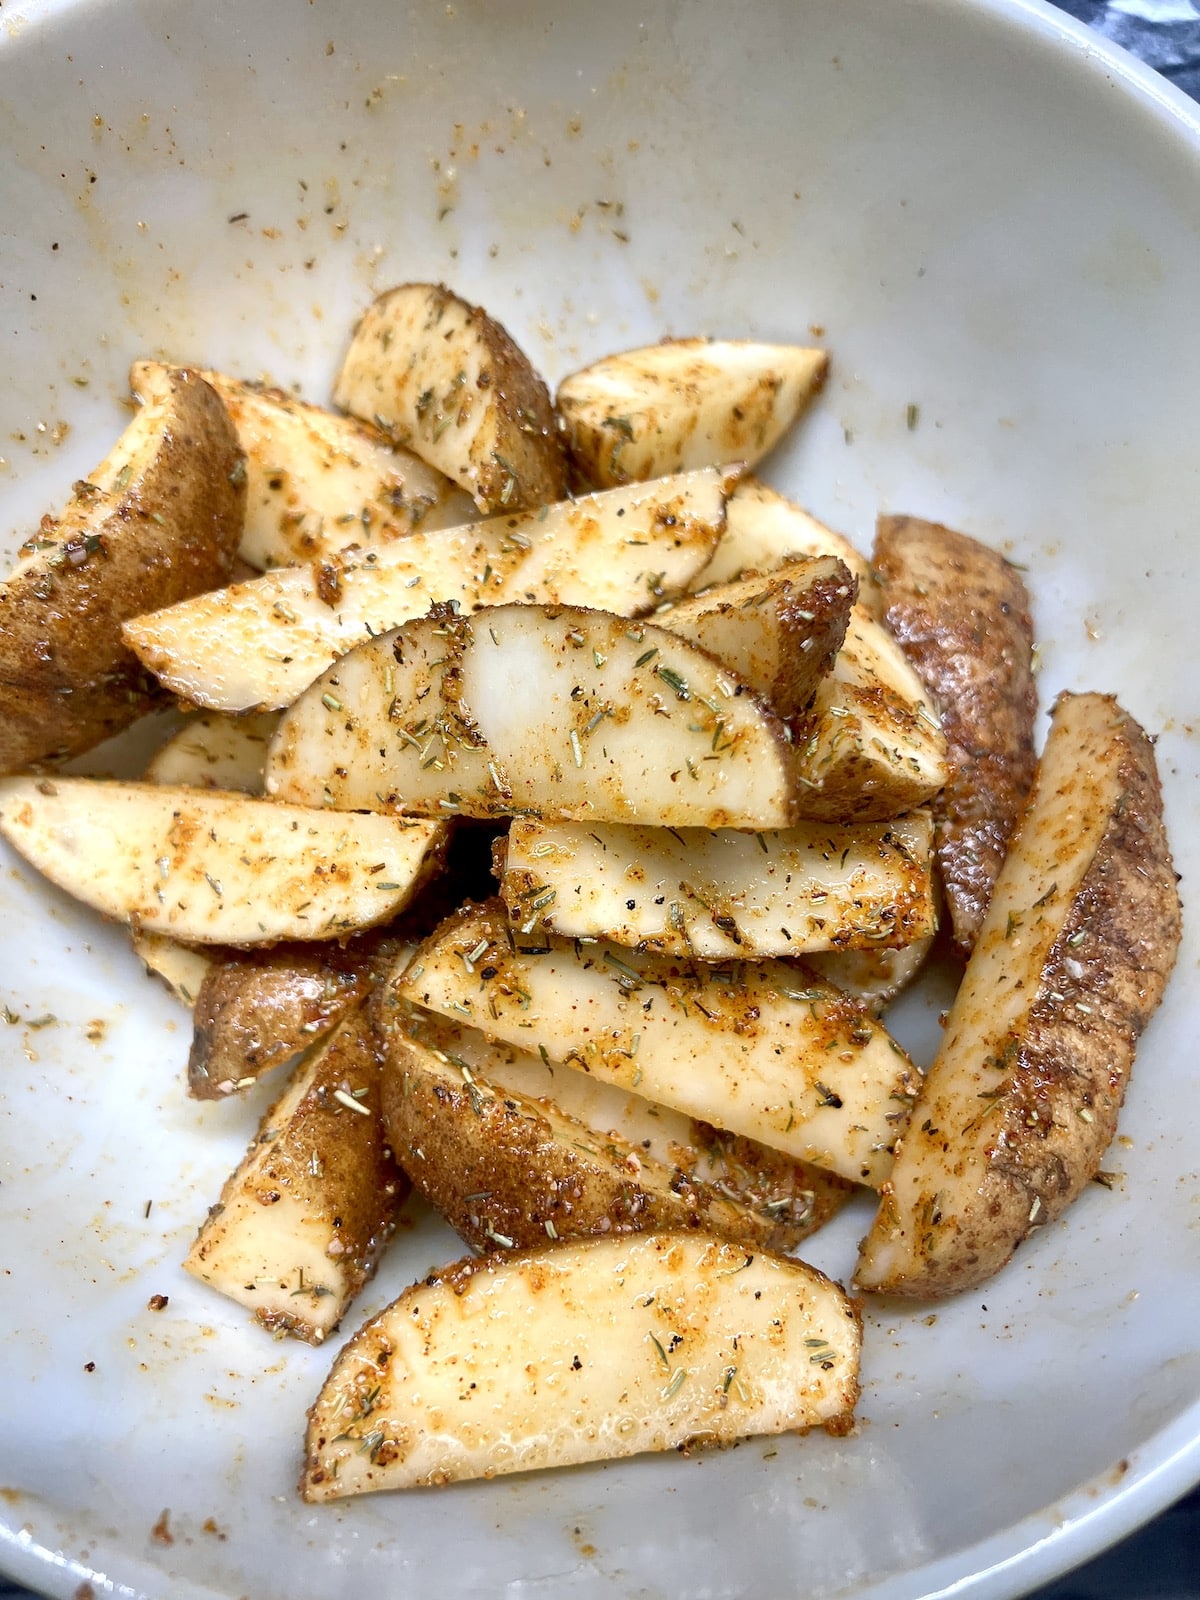 Bowl of potato wedges with seasonings.